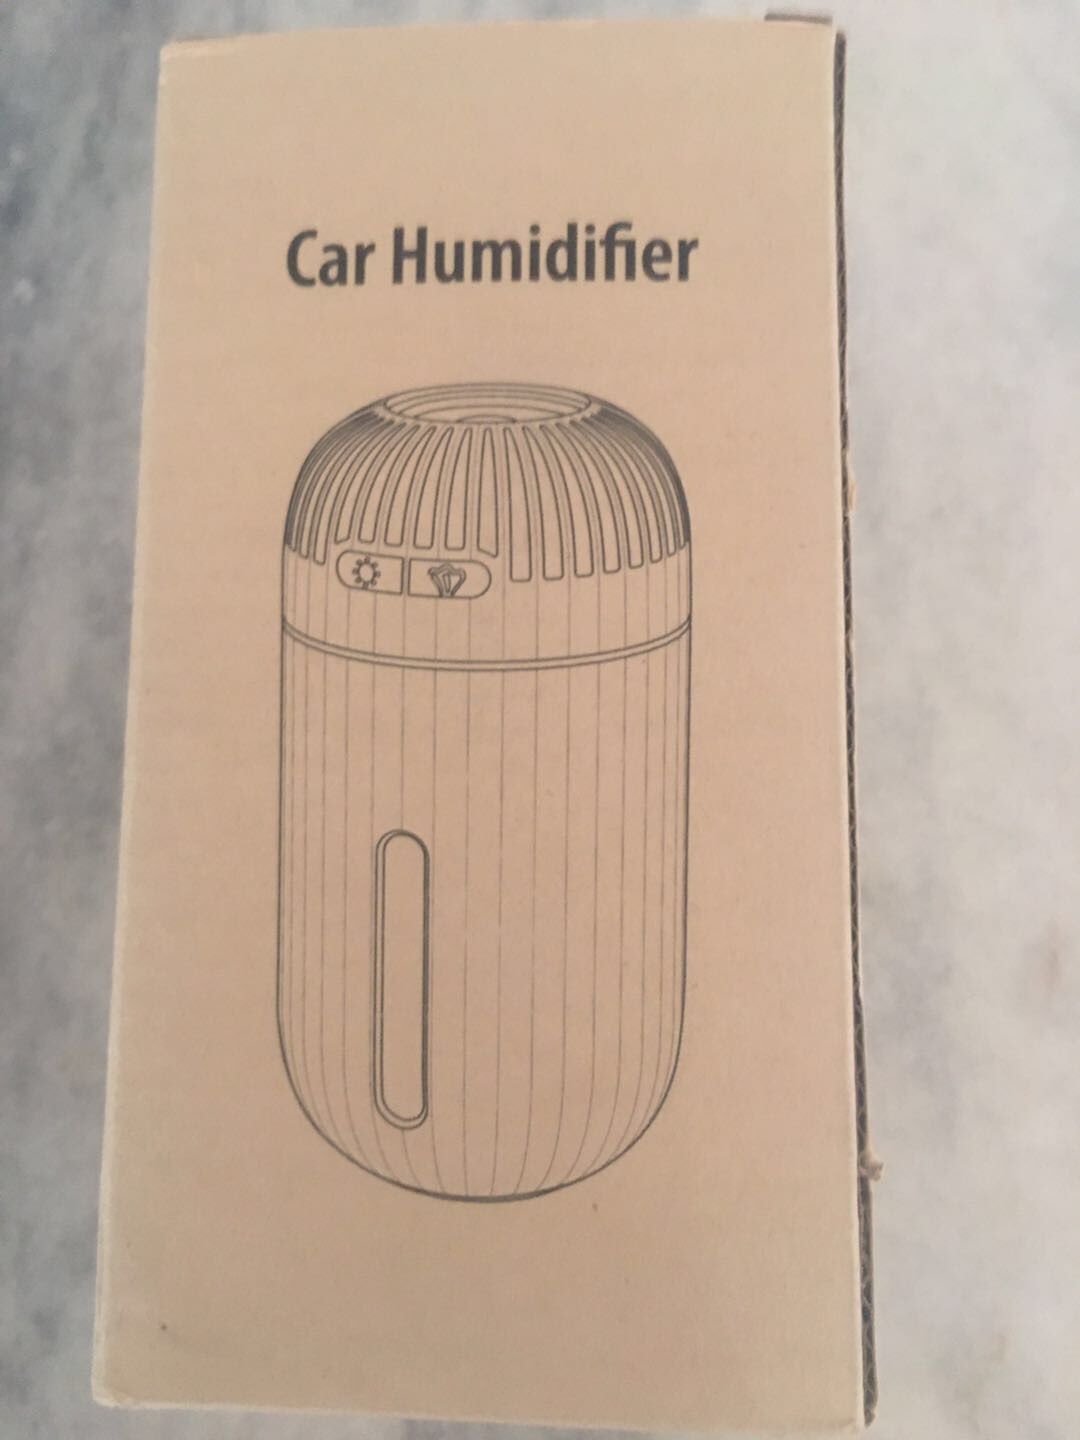 Car humidifier